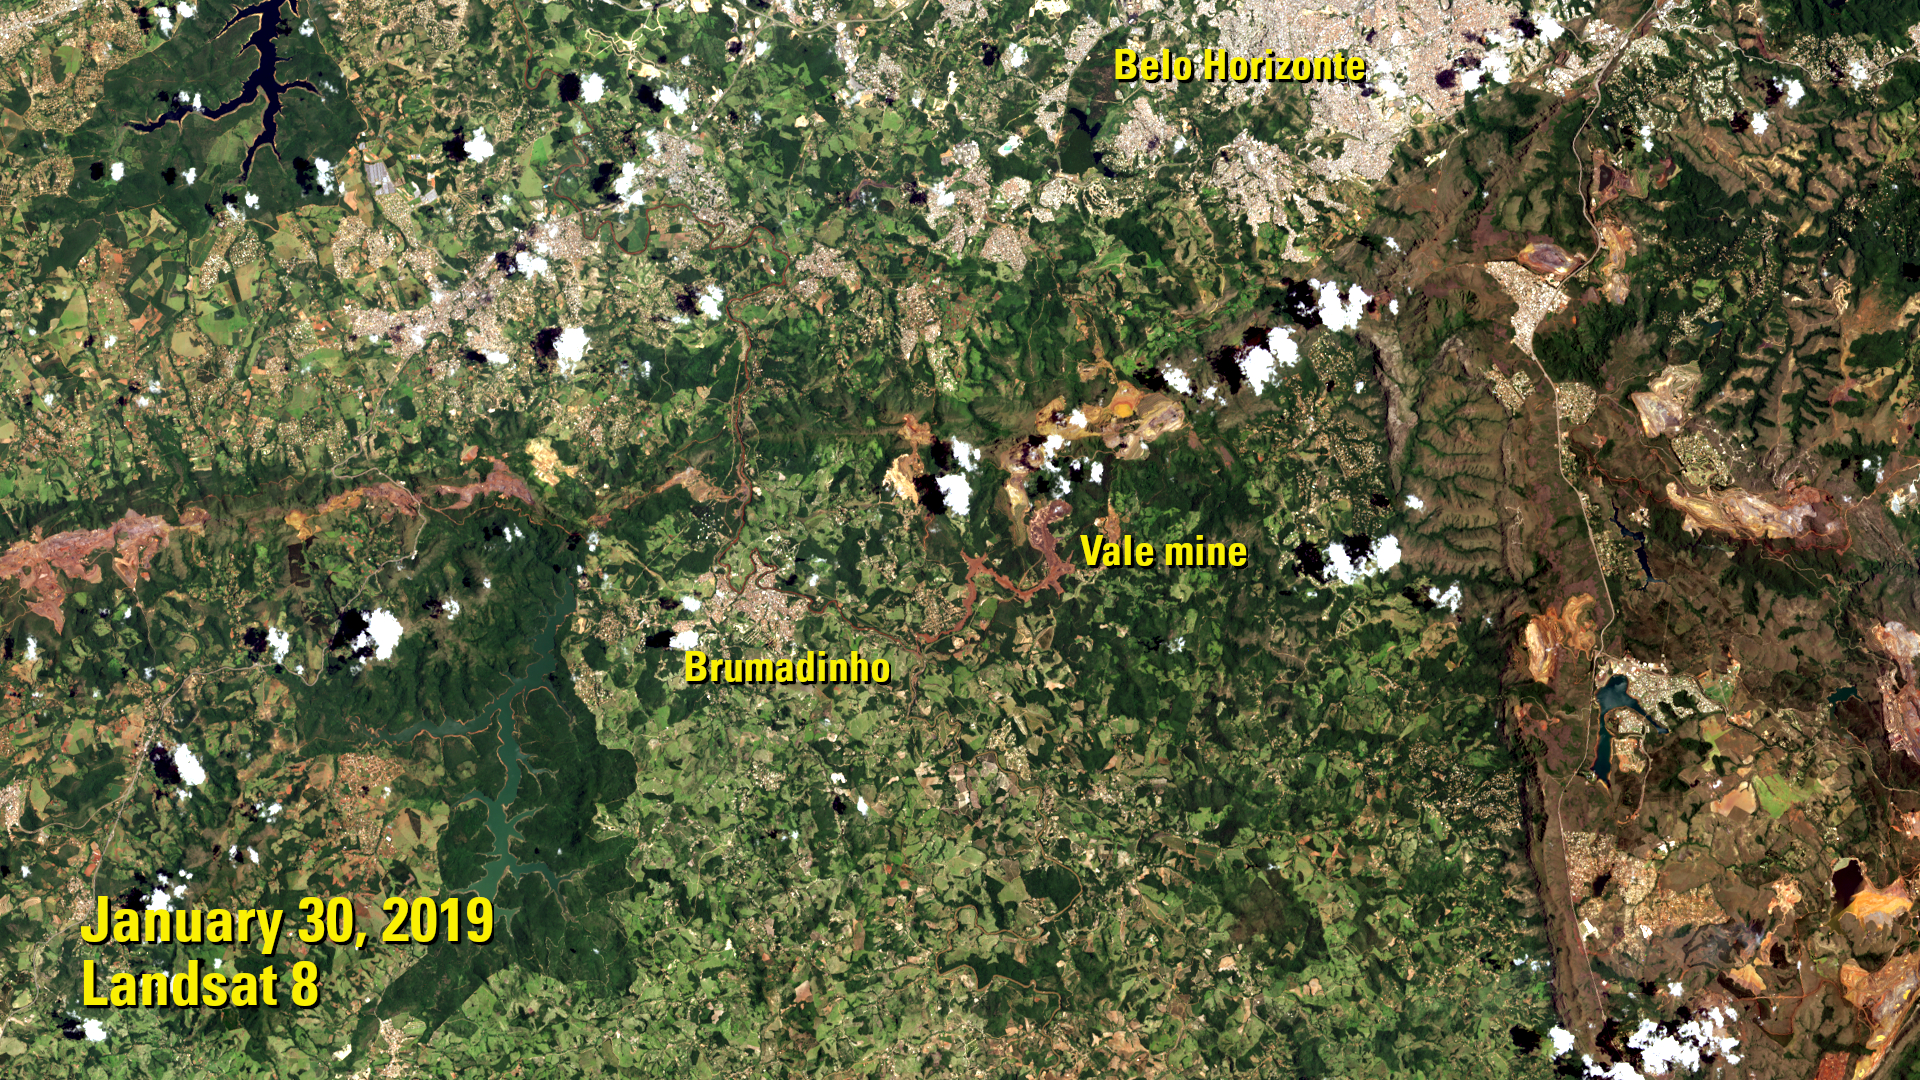 Landsat image of Minas Gerais, Brazil from January 30, 2019